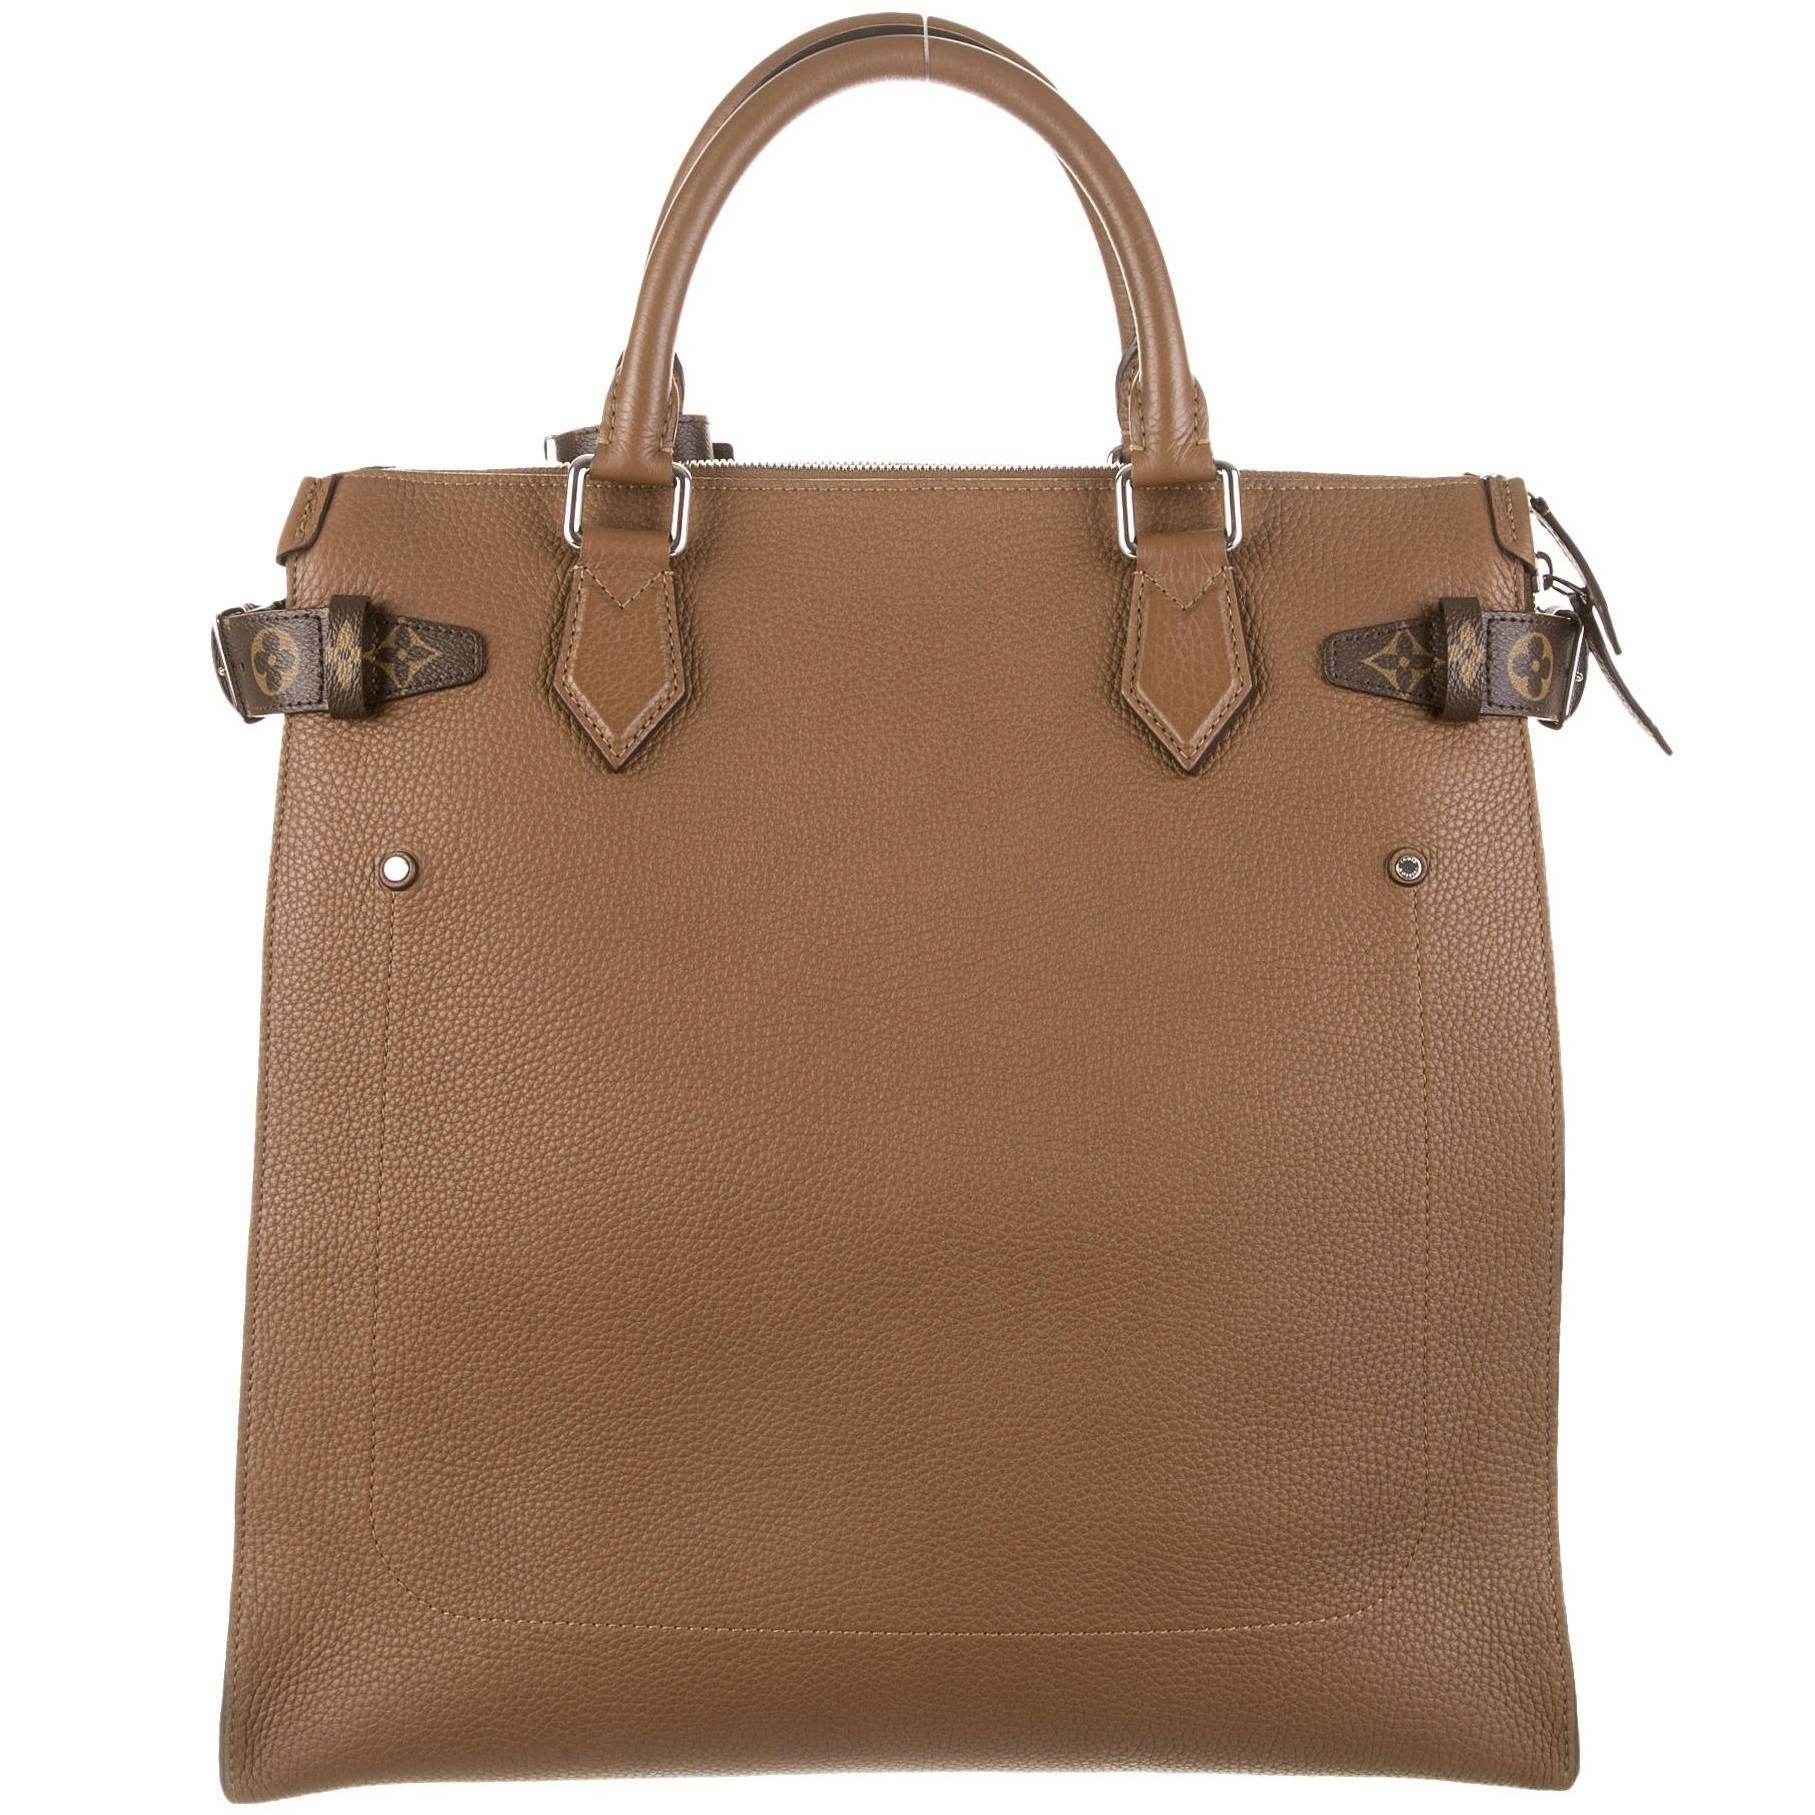 Louis Vuitton Limited Edition Cognac Leather Men's Travel Carryall Tote Bag